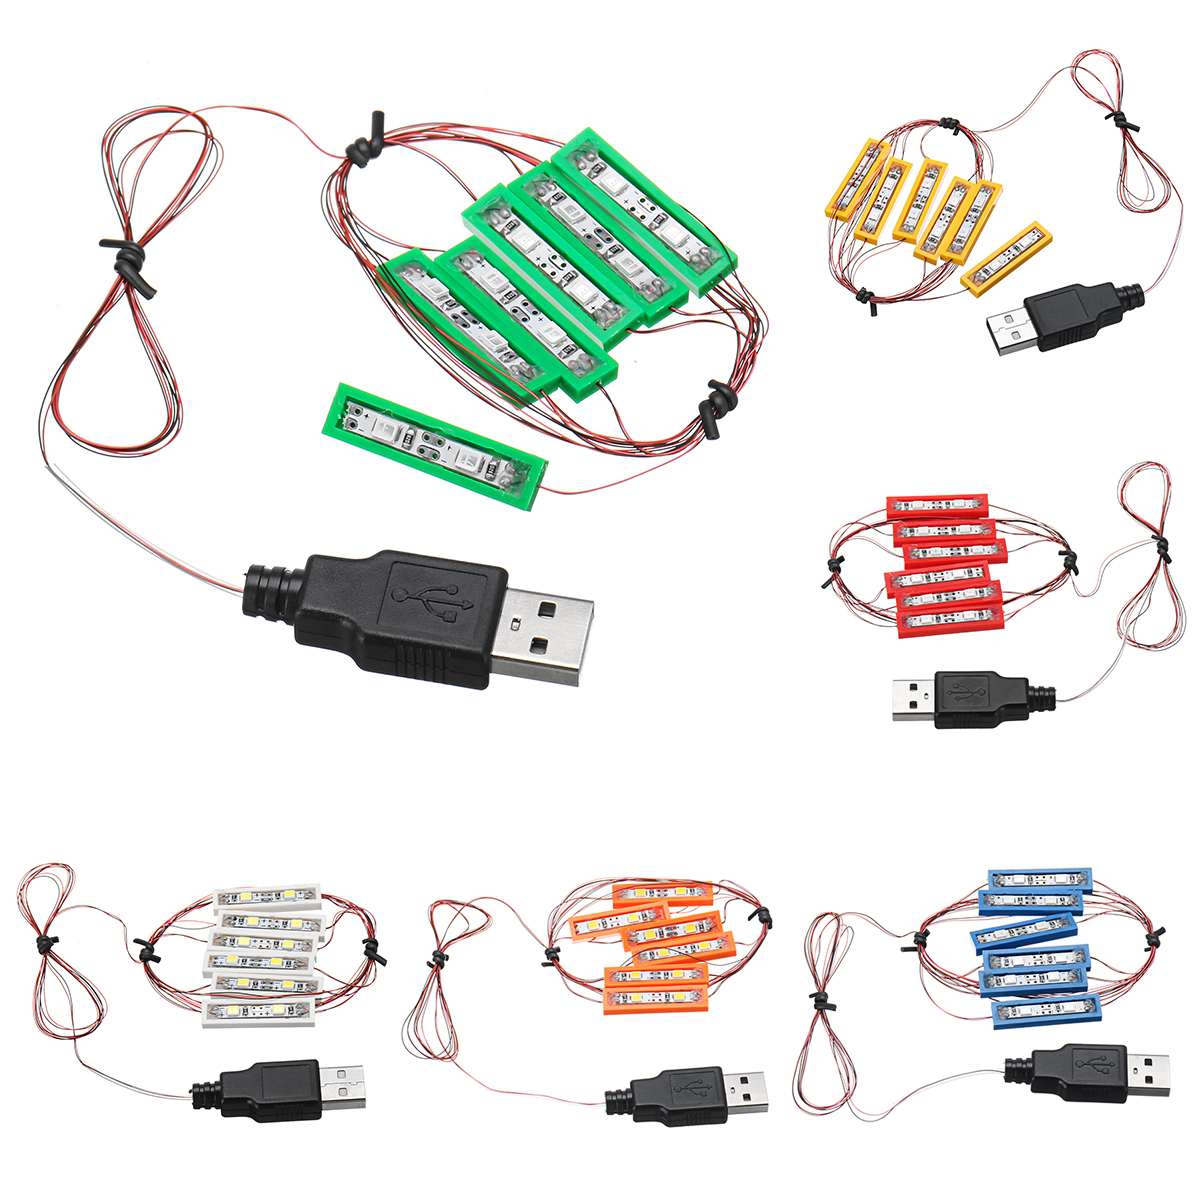 Universal-DIY-LED-Light-Brick-Kit-For-Lego-MOC-Toys-USB-Port-Blocks-Accessories-Decor-1444426-6